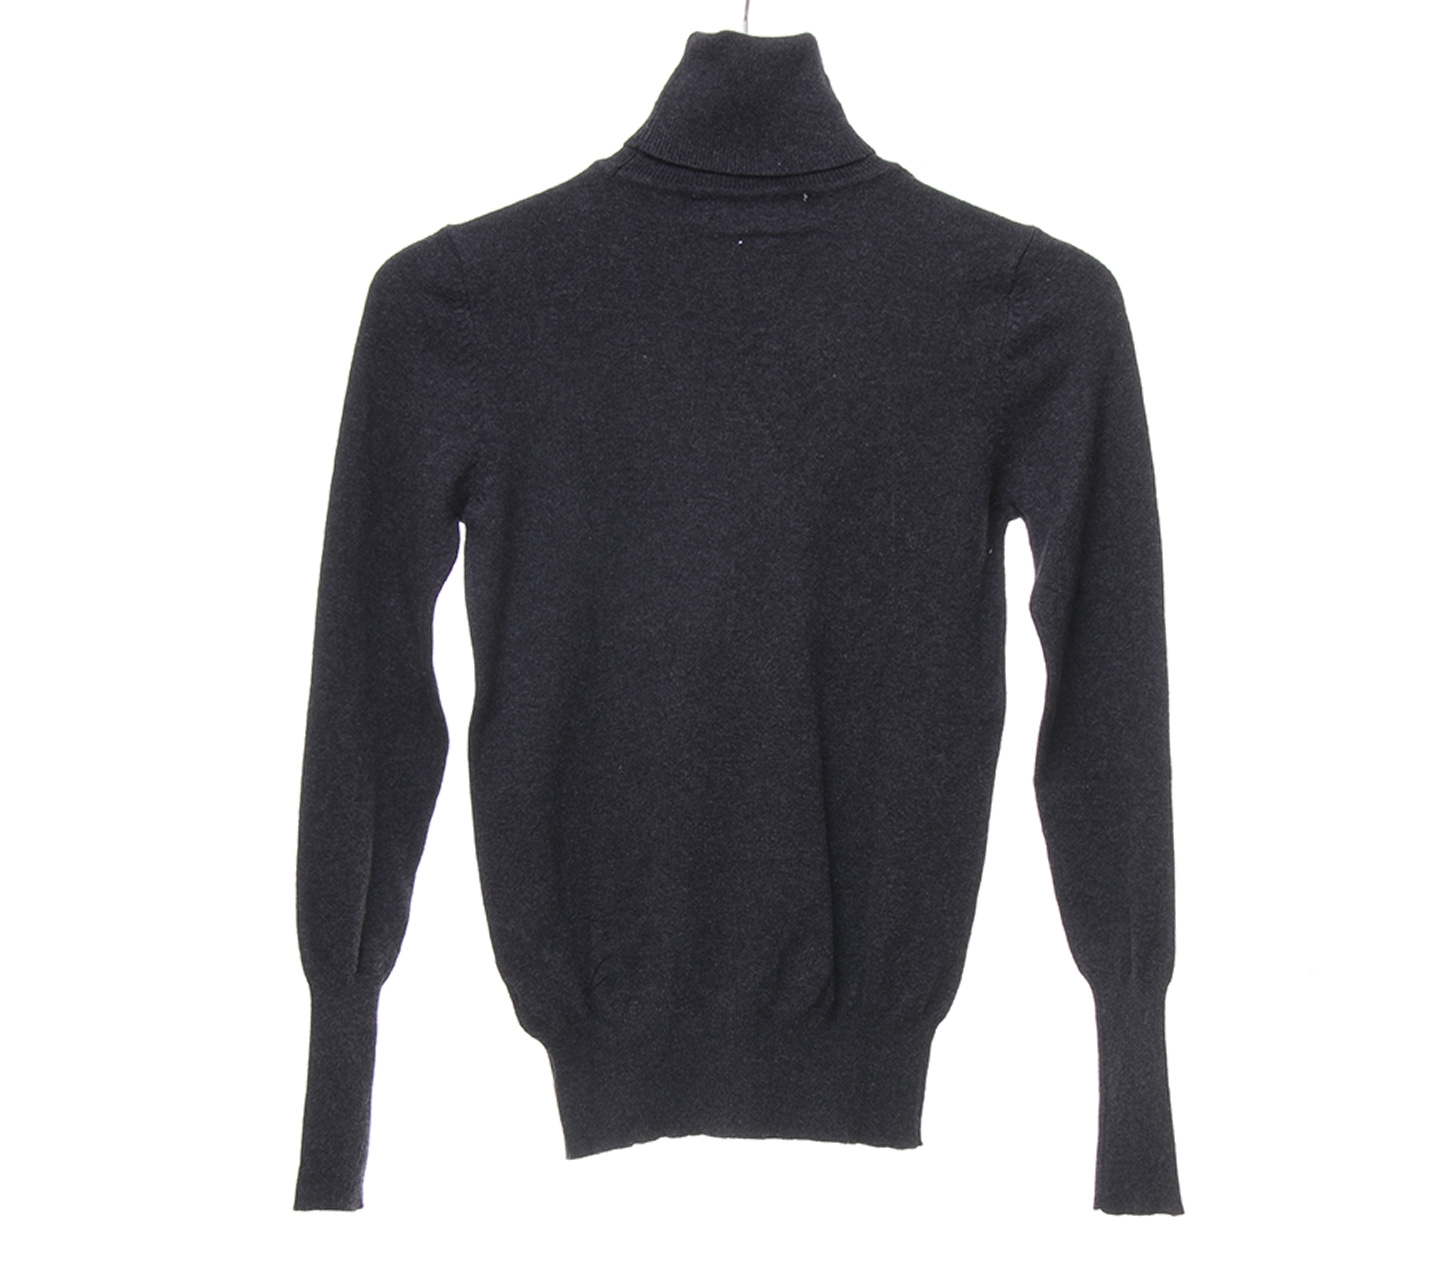 Zara Dark Grey Knit Turtle Neck Sweater